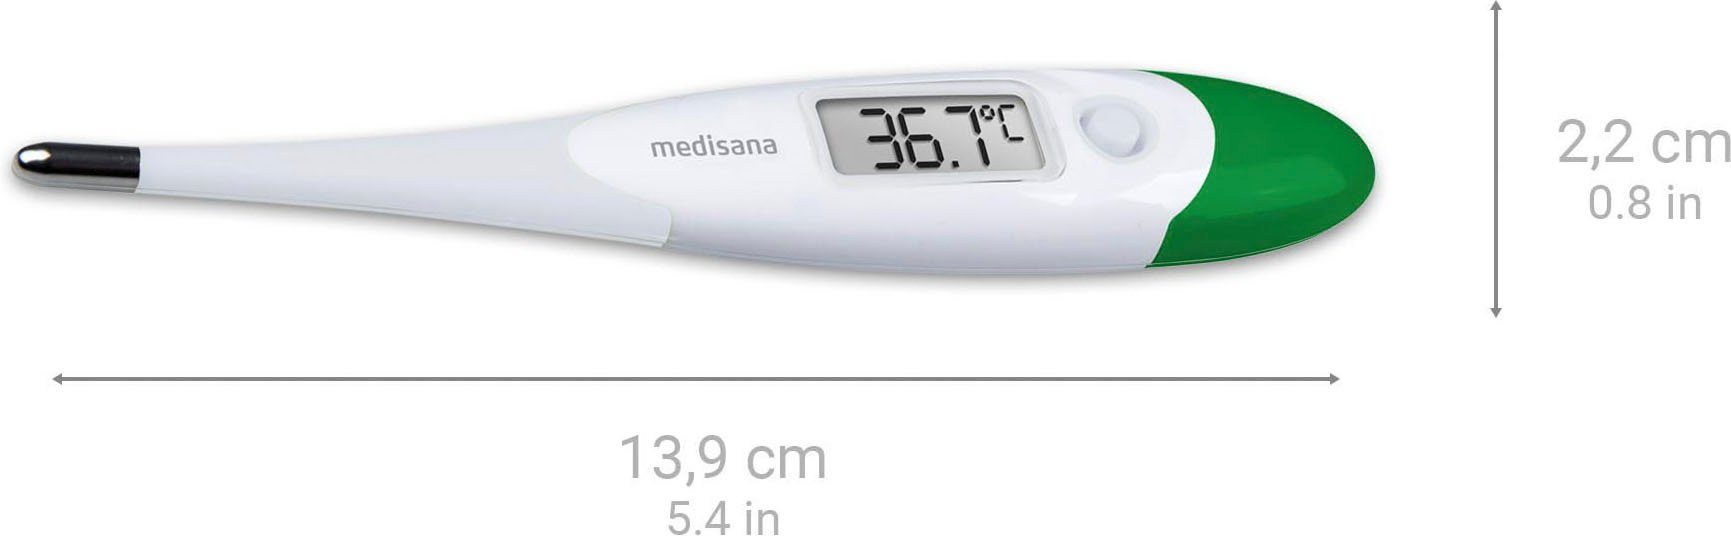 TM700 Medisana Fieberthermometer